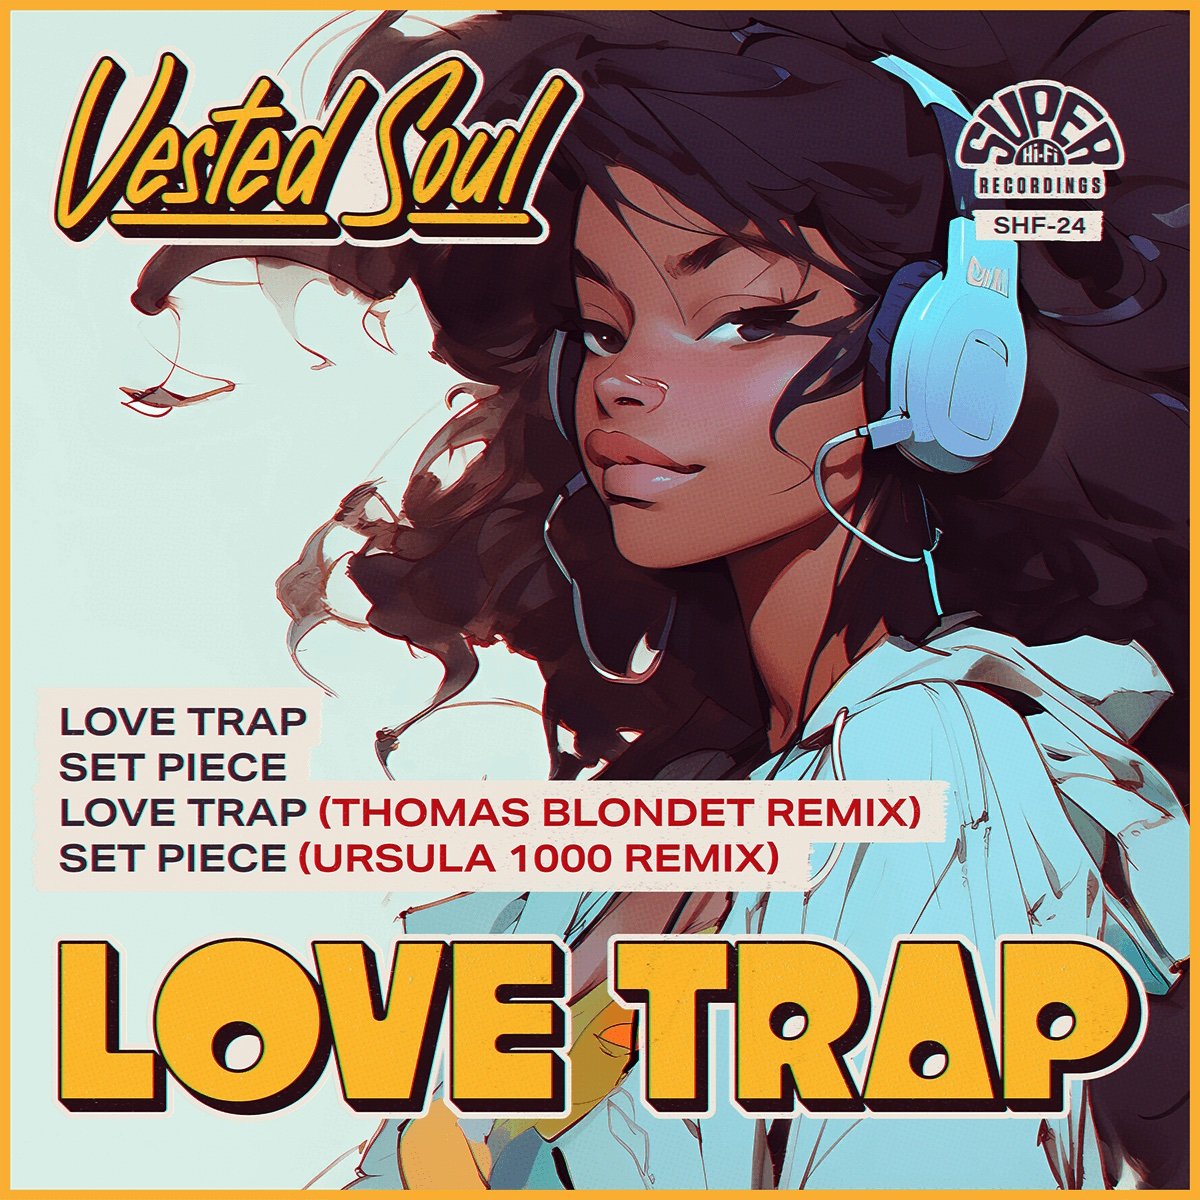 Vested Soul - Love Trap (Super Hi-Fi Recordings)